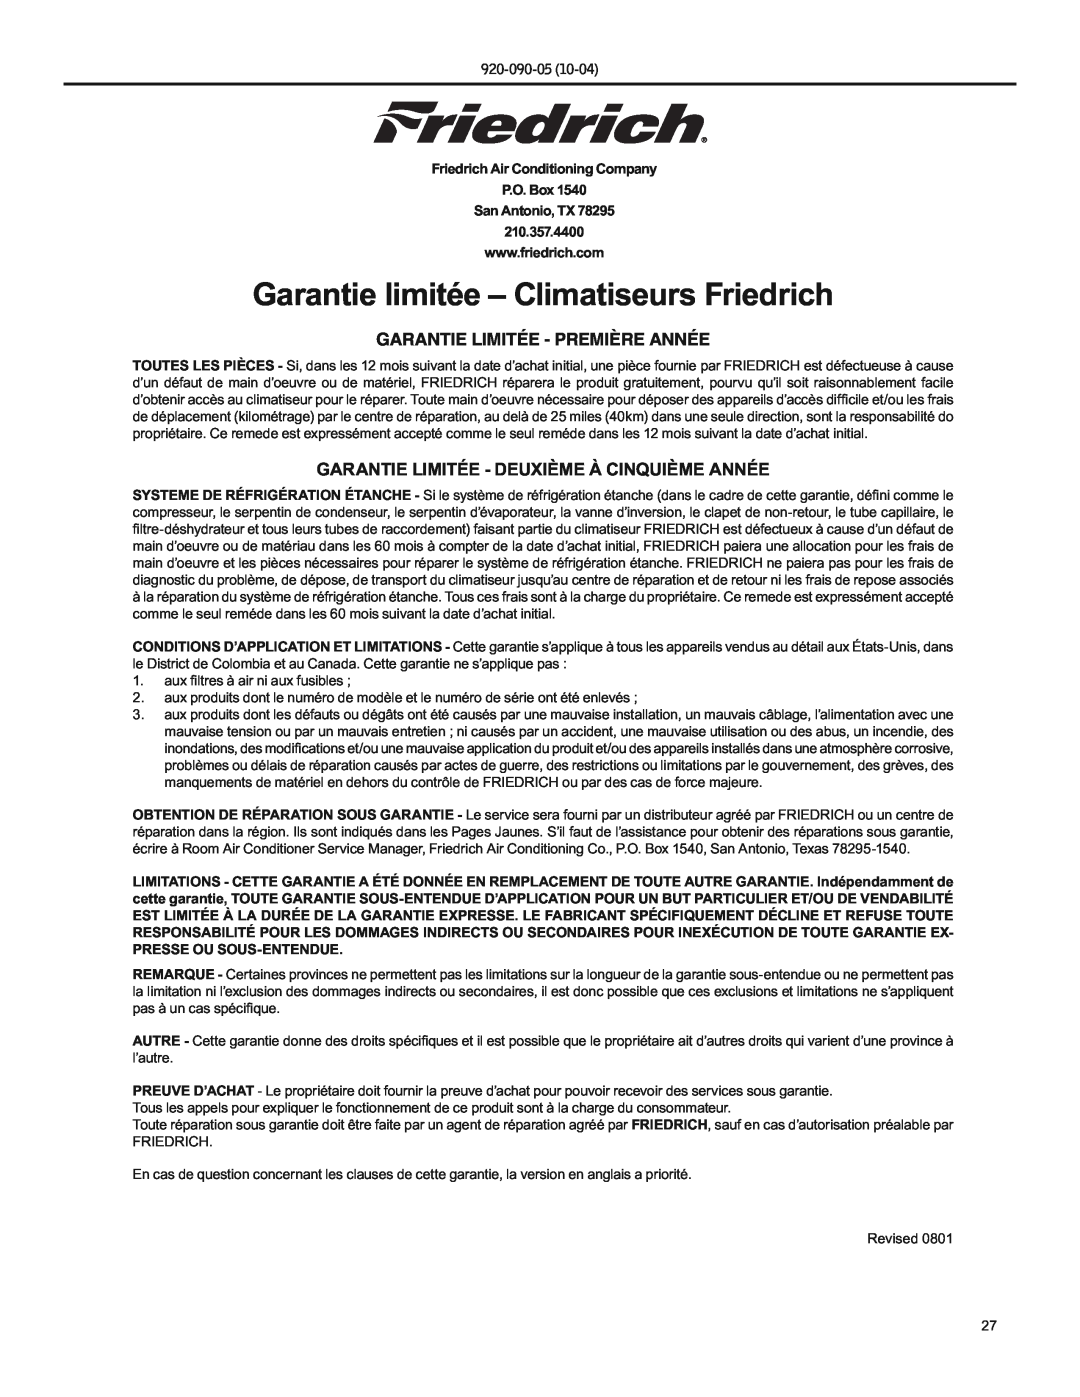 Friedrich SS09 manual Garantie limitée - Climatiseurs Friedrich, Garantie Limitée - Première Année, 920-090-05 